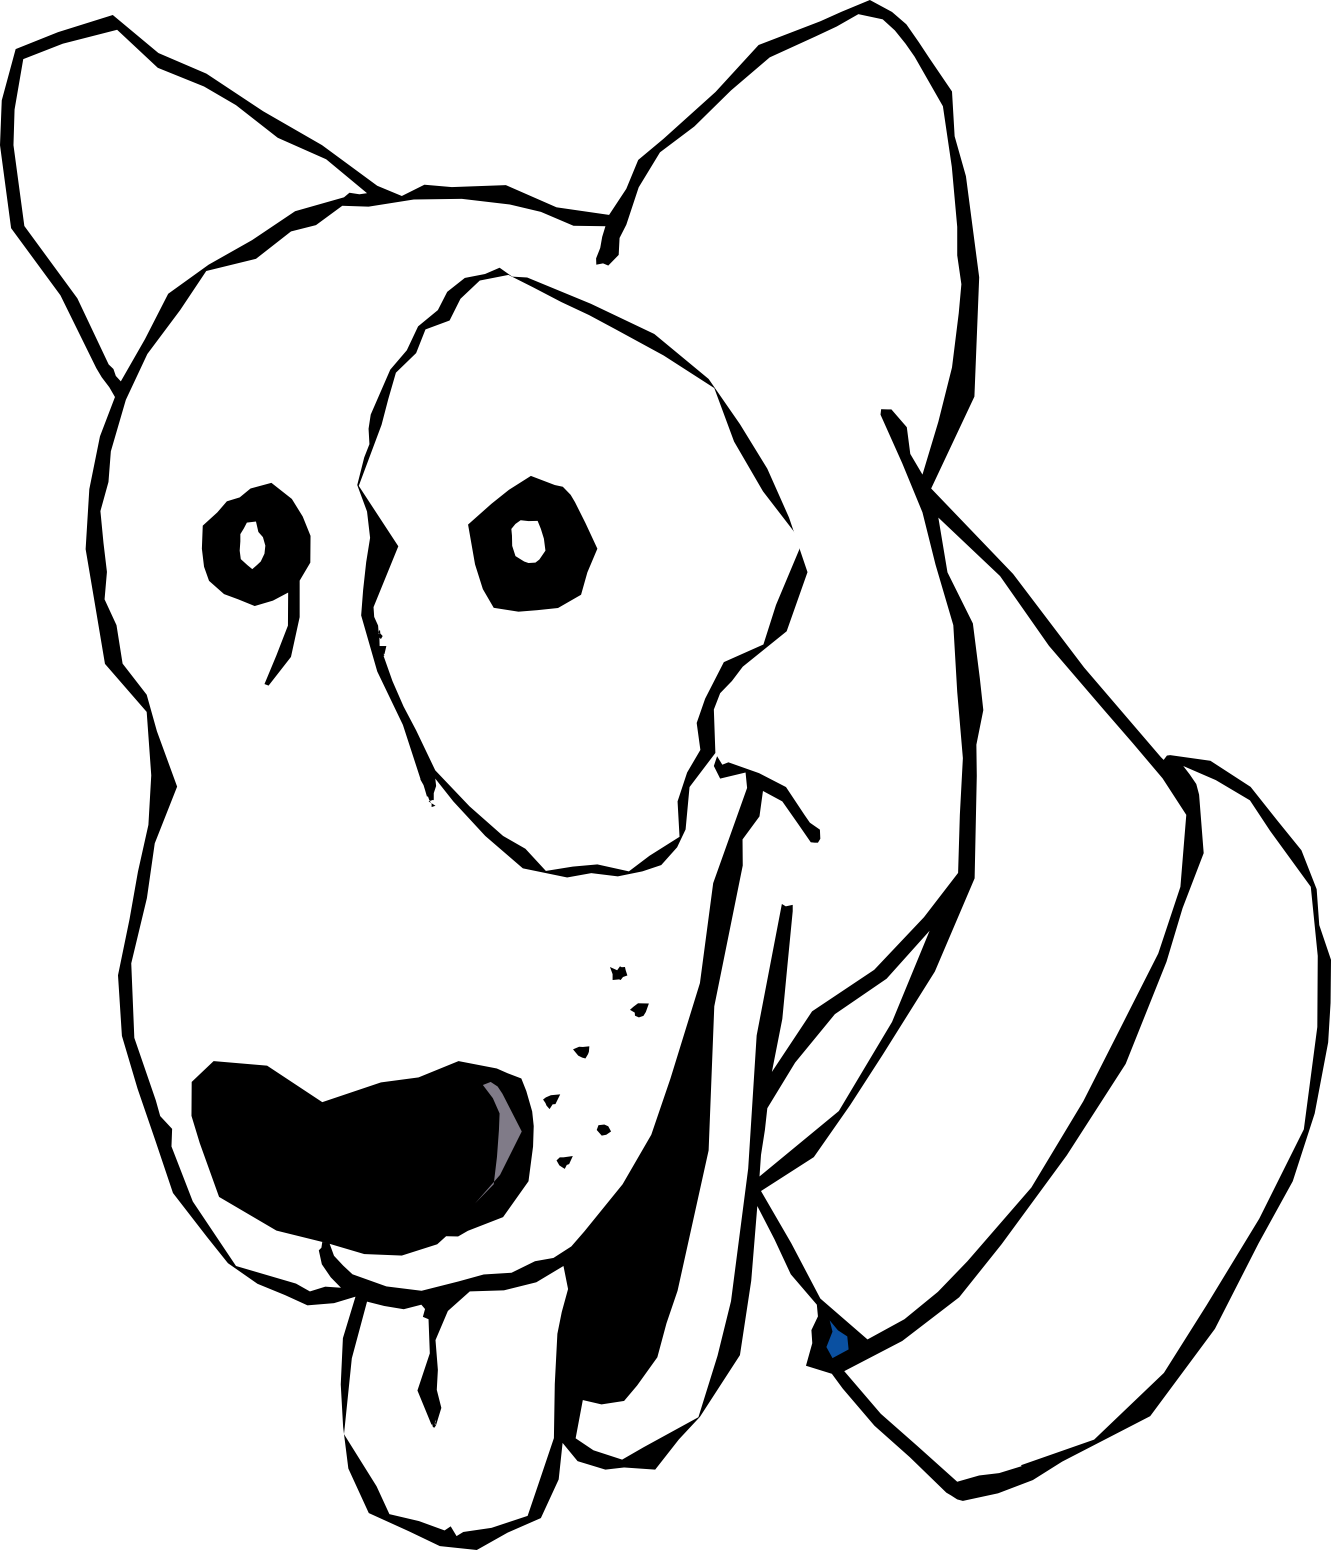 ArtFavor cartoon dog head black white line art ... - ClipArt Best ...